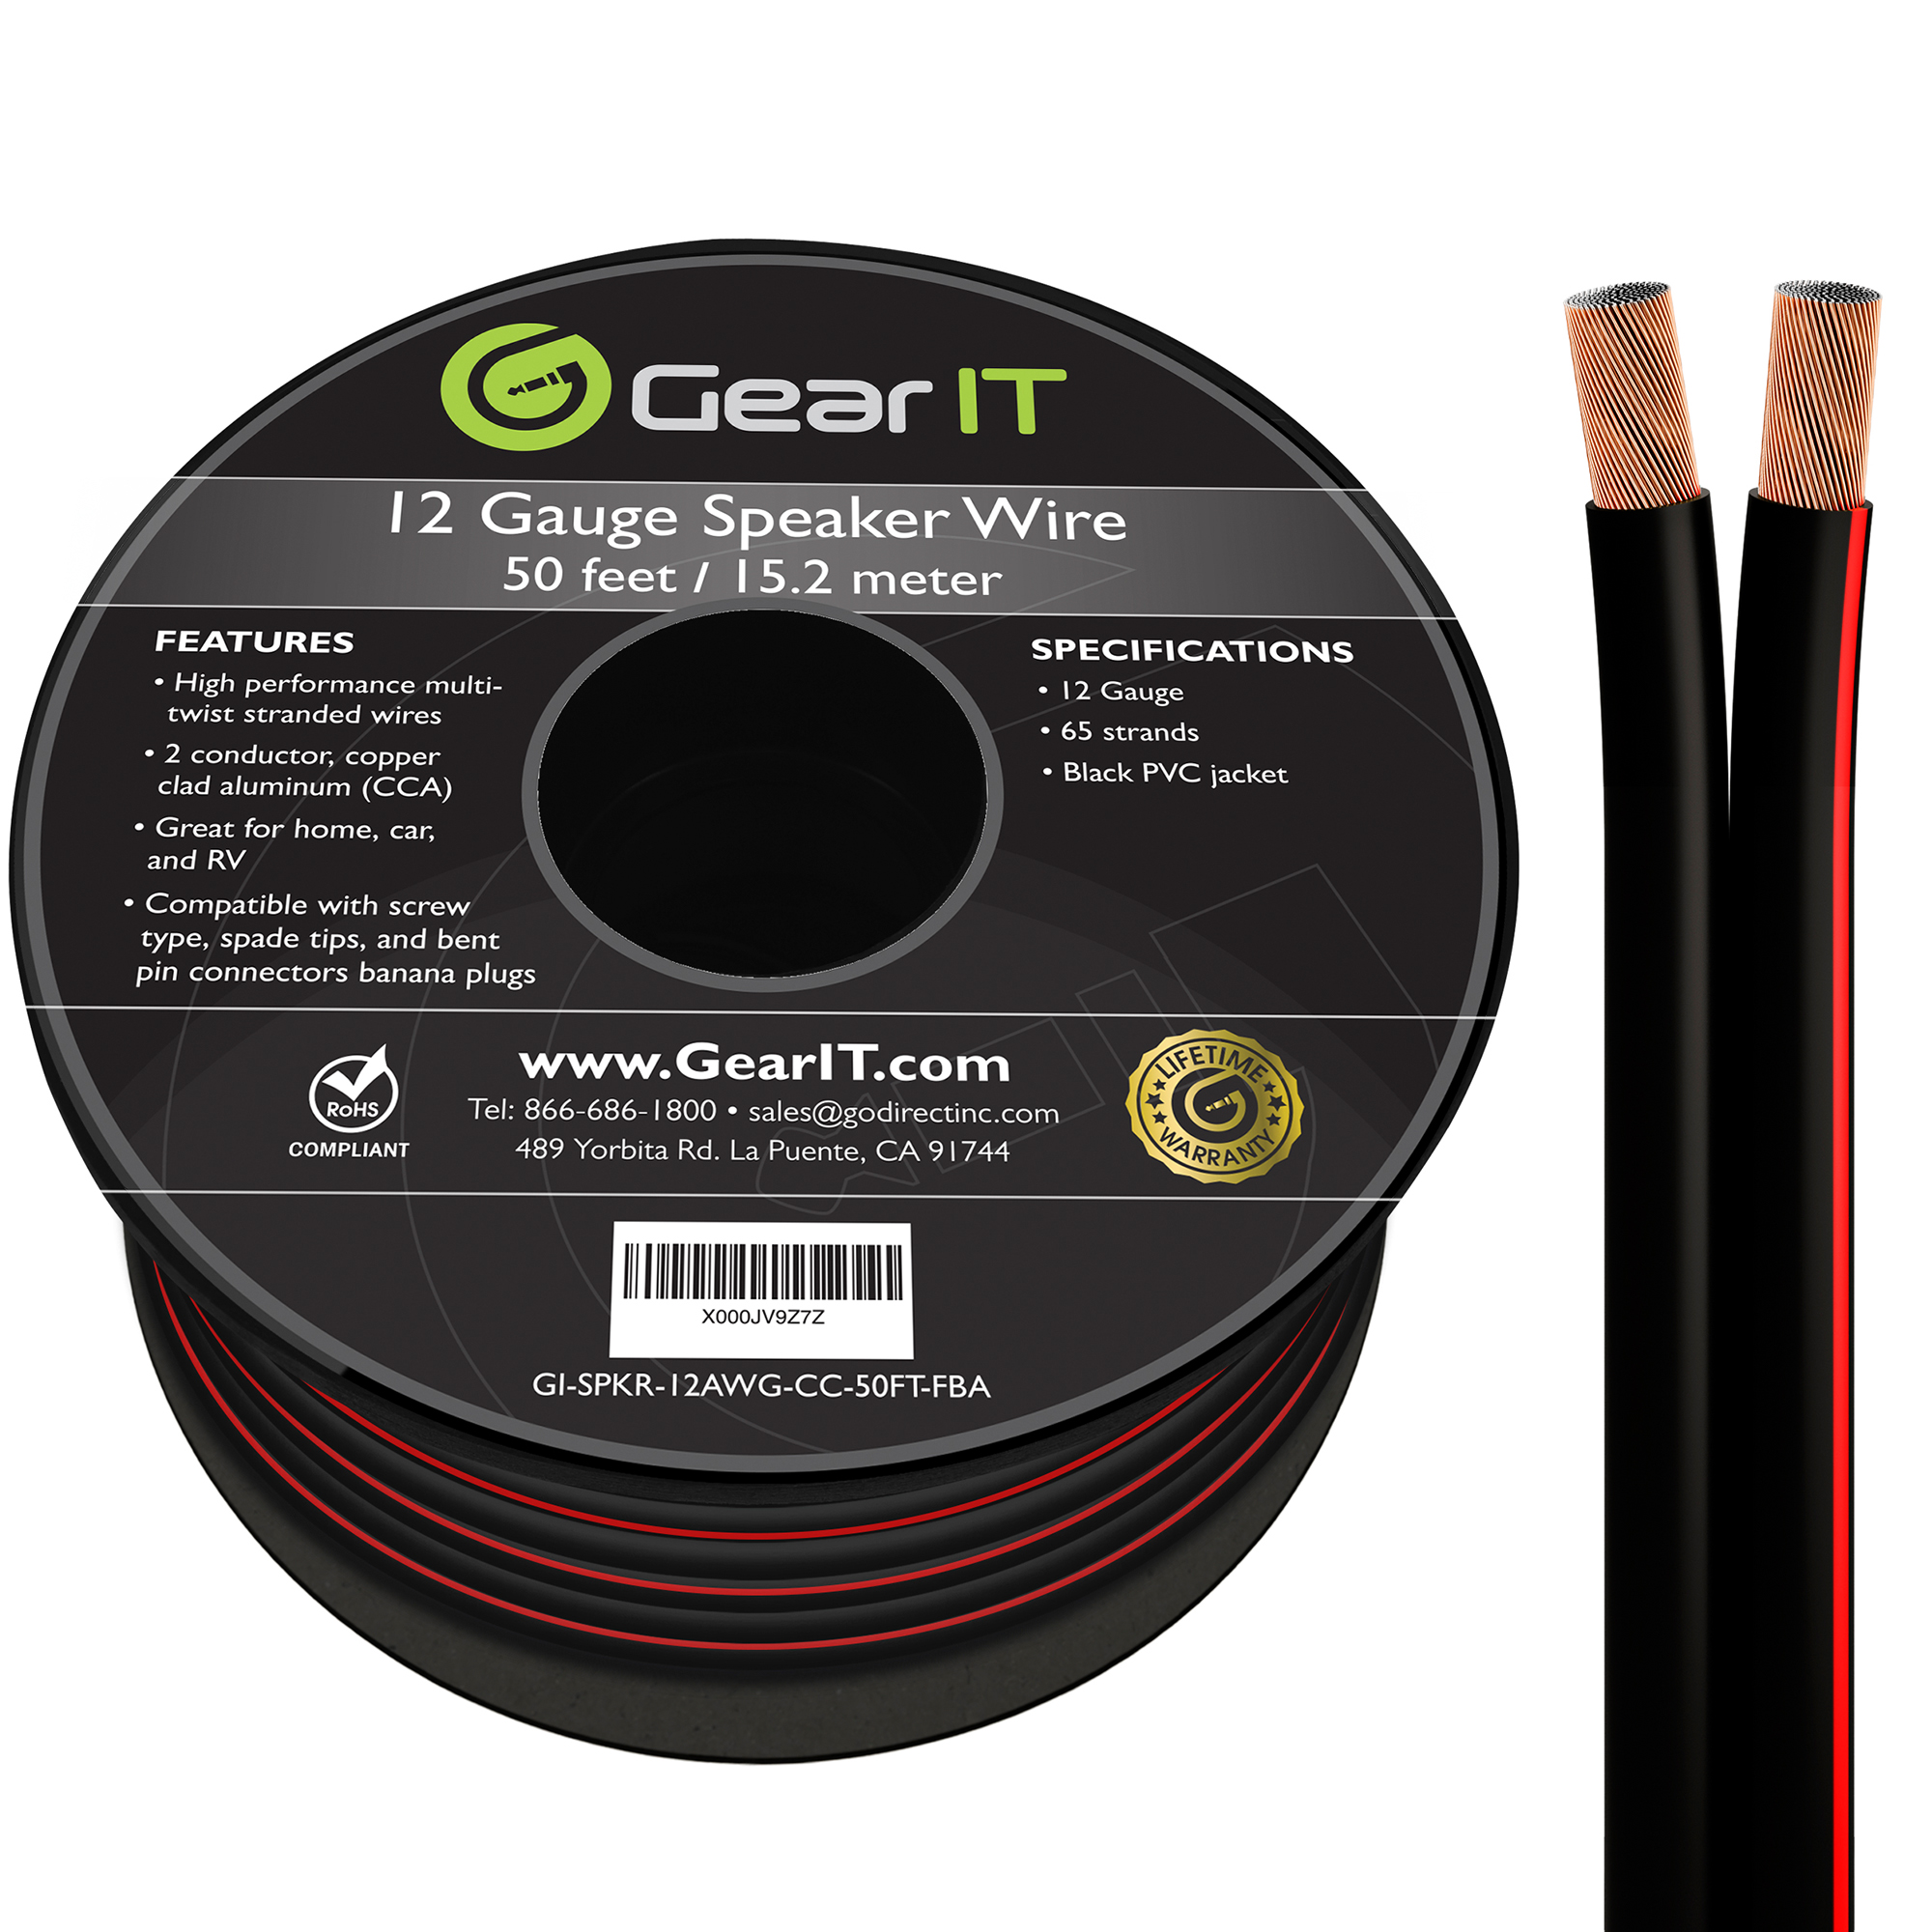 GearIT Pro Series 12 Gauge Speaker Wire Copper Clad Aluminum CCA Audio Cable, Black 50 ft - image 1 of 8